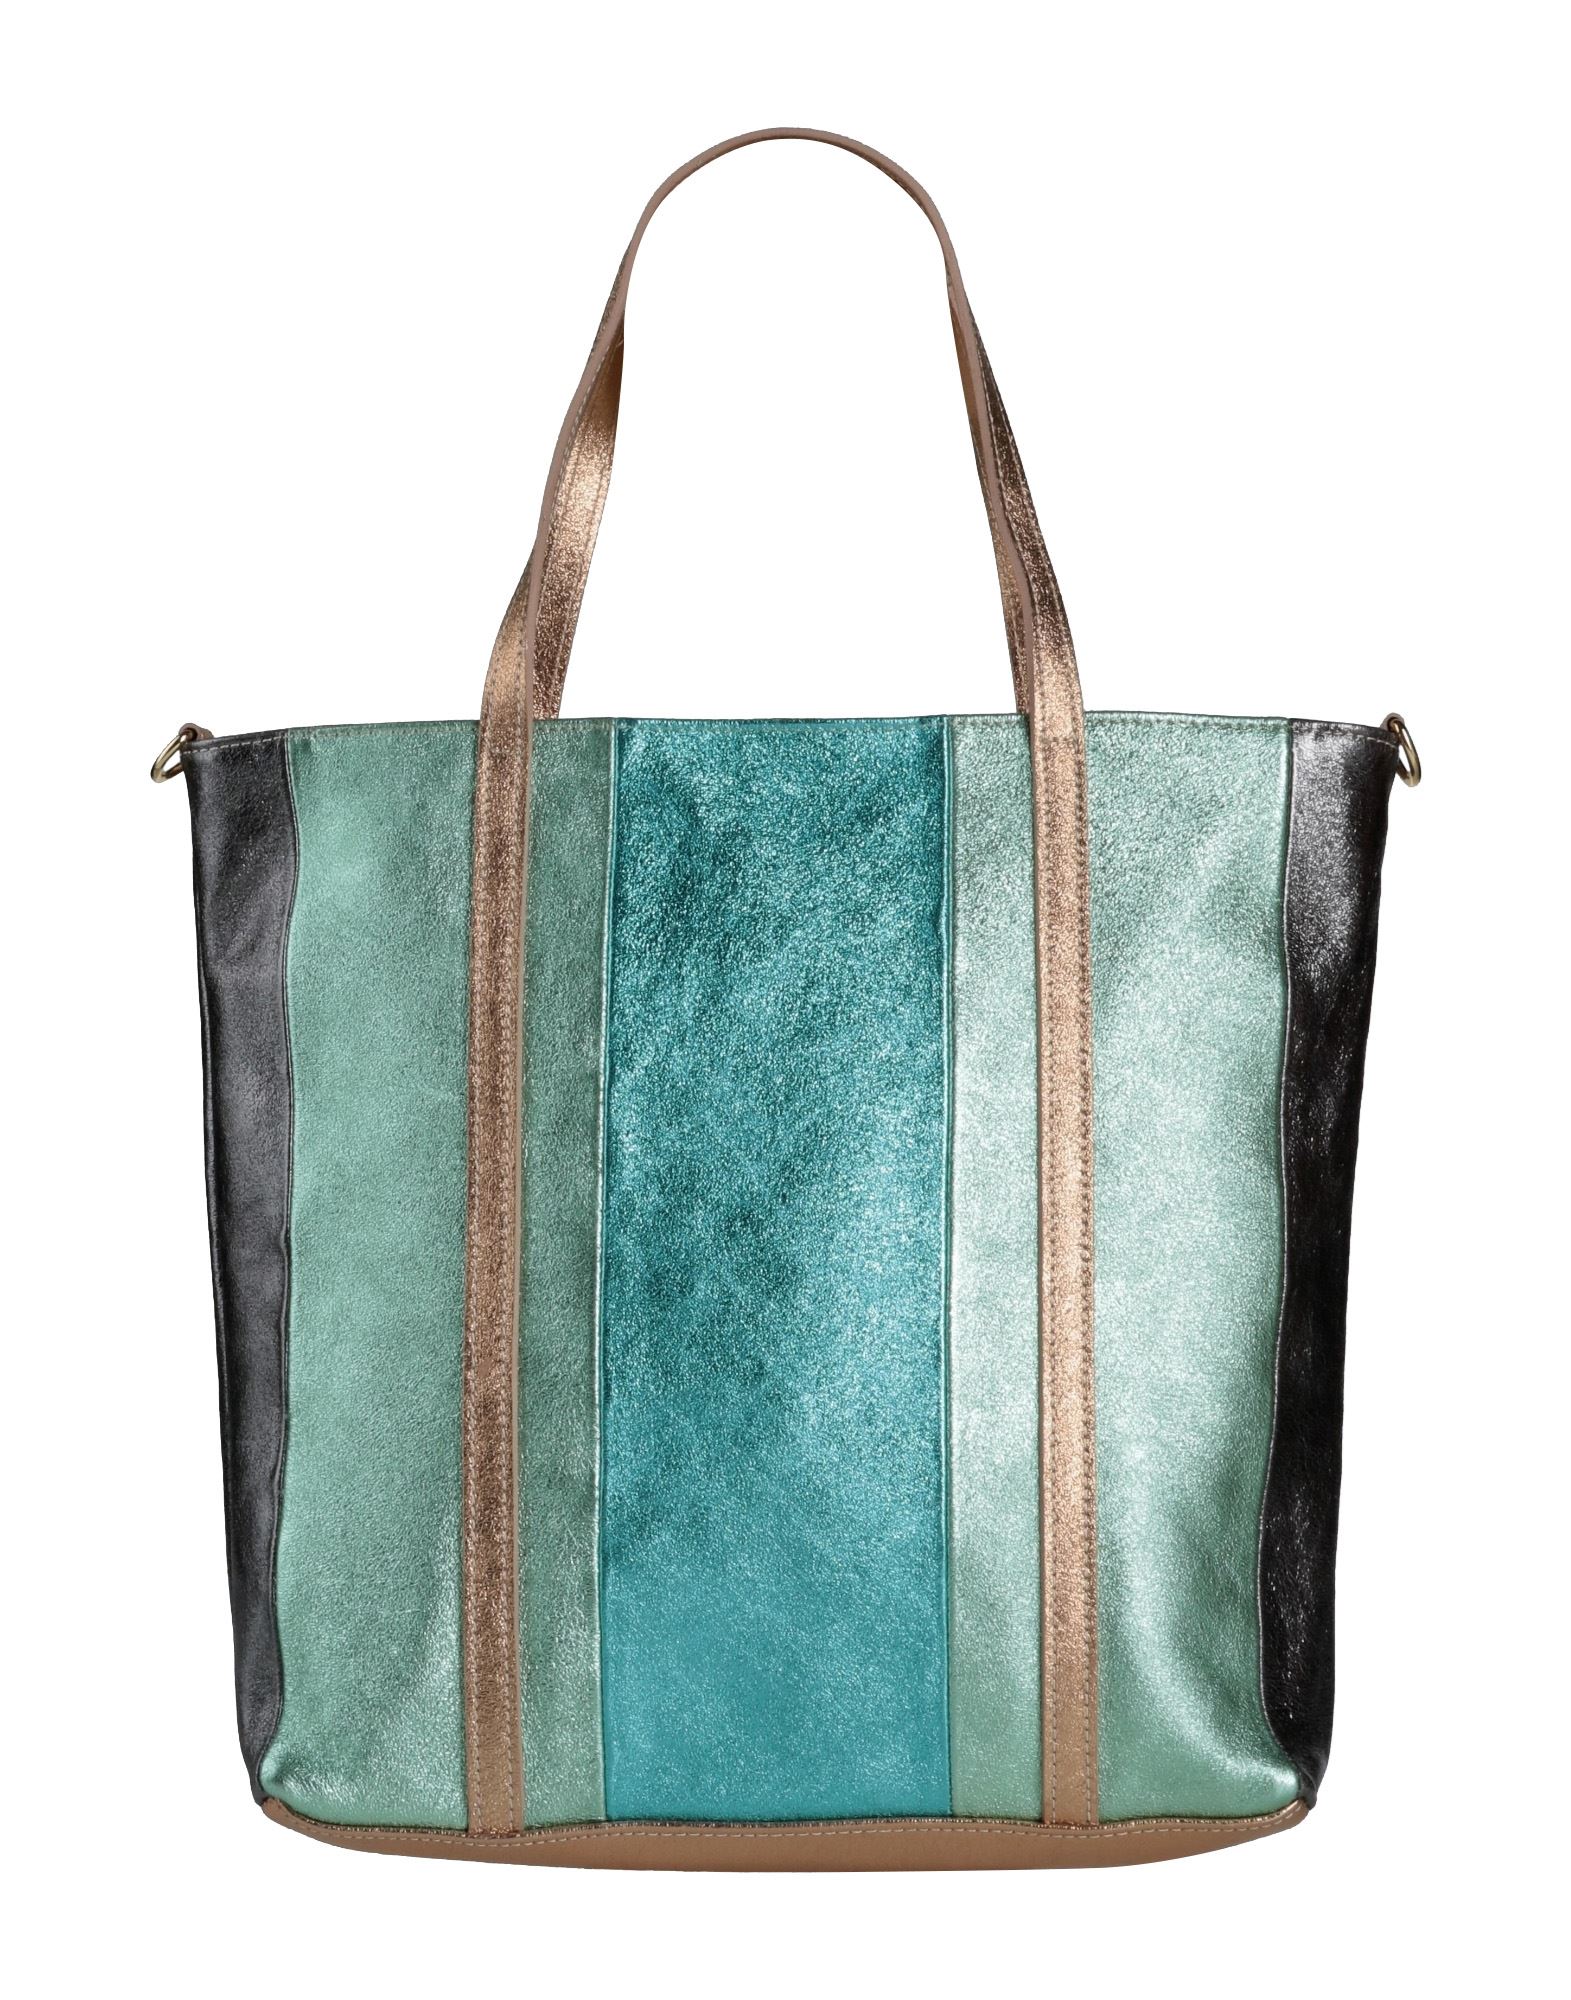 Show me your favorite green bag : r/handbags